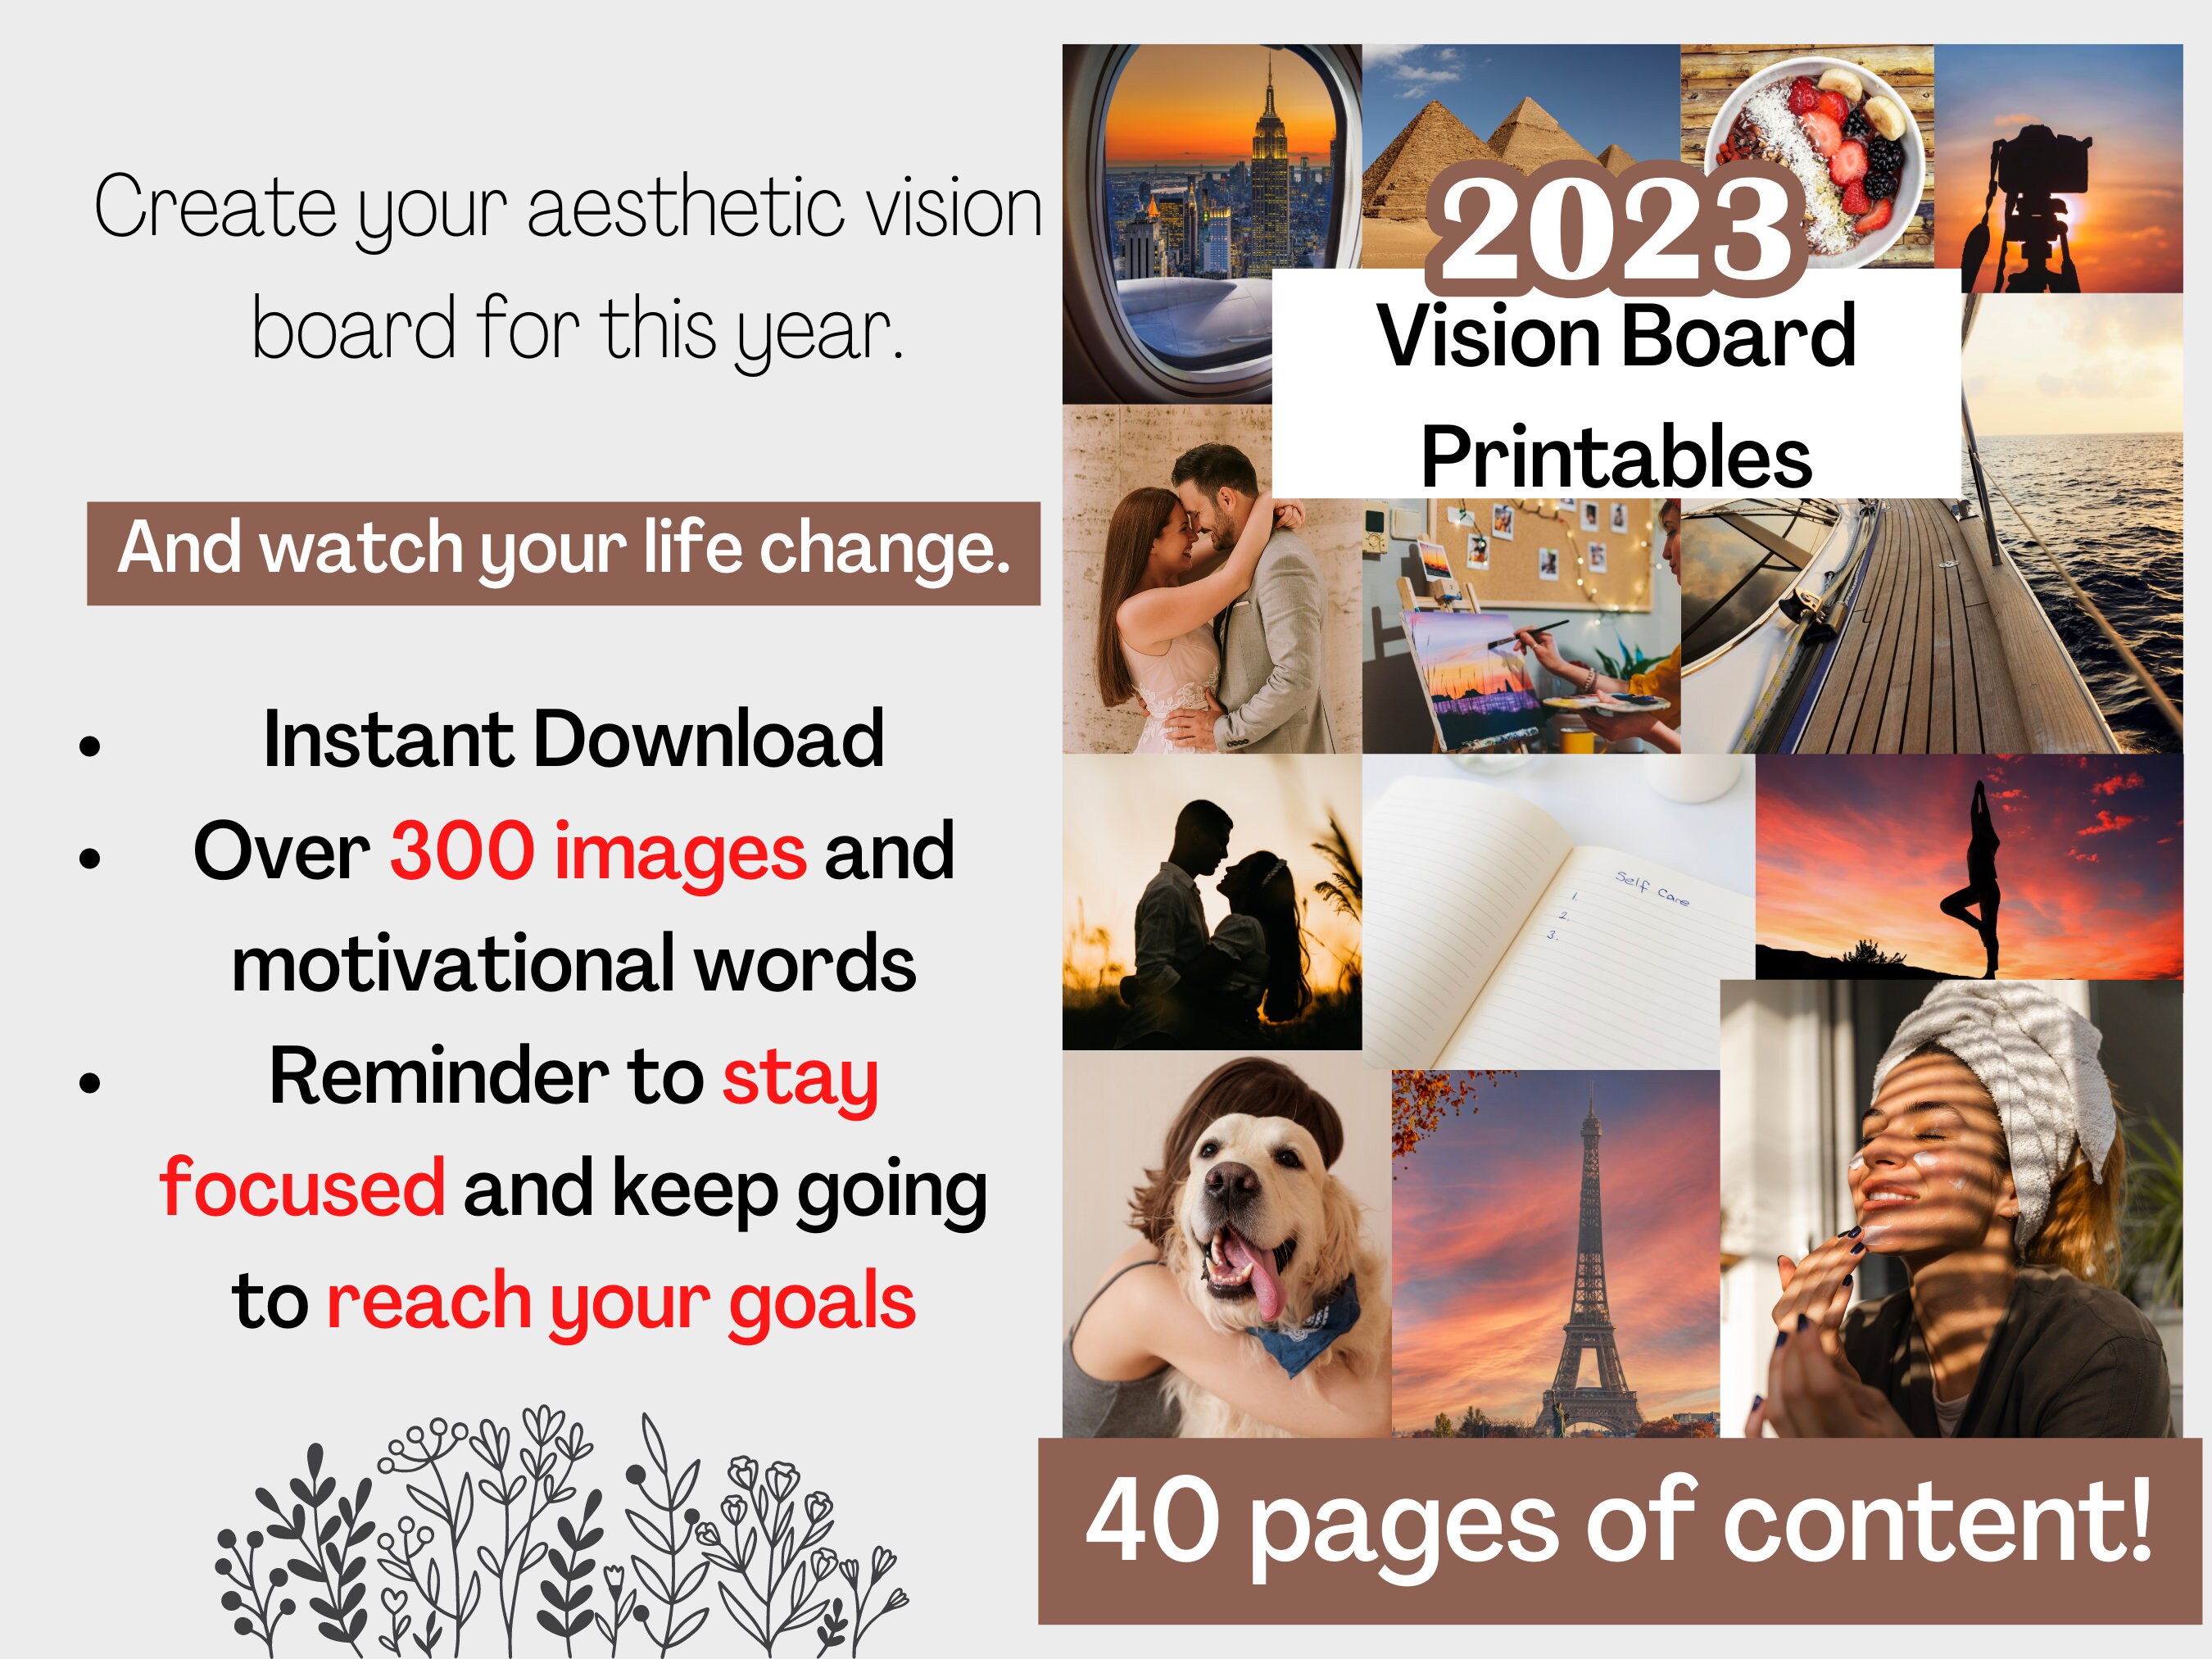 Vision Board Printables 2024, Vision Board Accessories, Vision Board Kit  Supplies, Vision Board Magazine, Motivational Board, LOA 